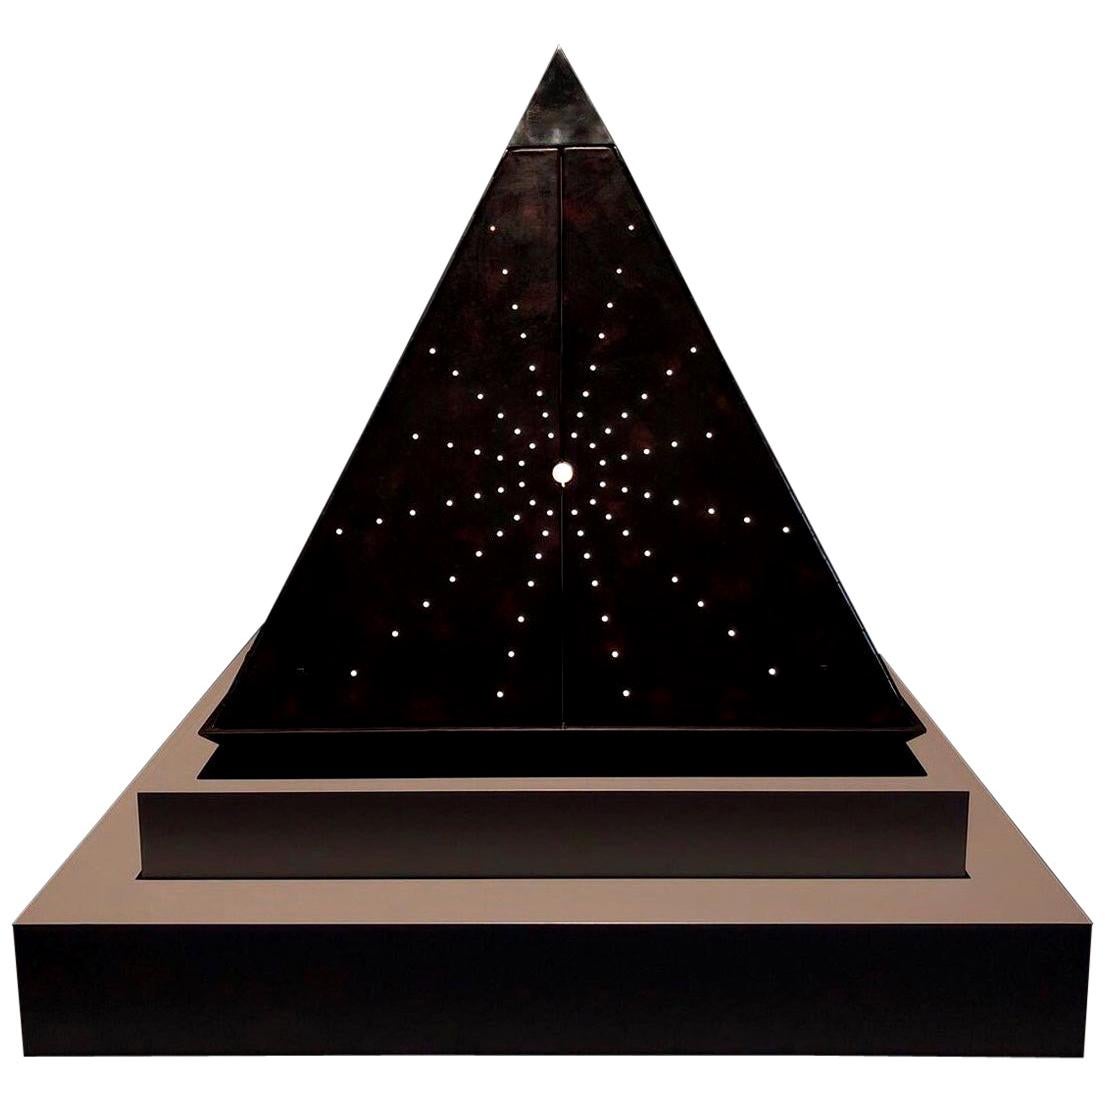 Oscar Tusquets - Pyramid contemporain en cuir étoilé - Édition limitée